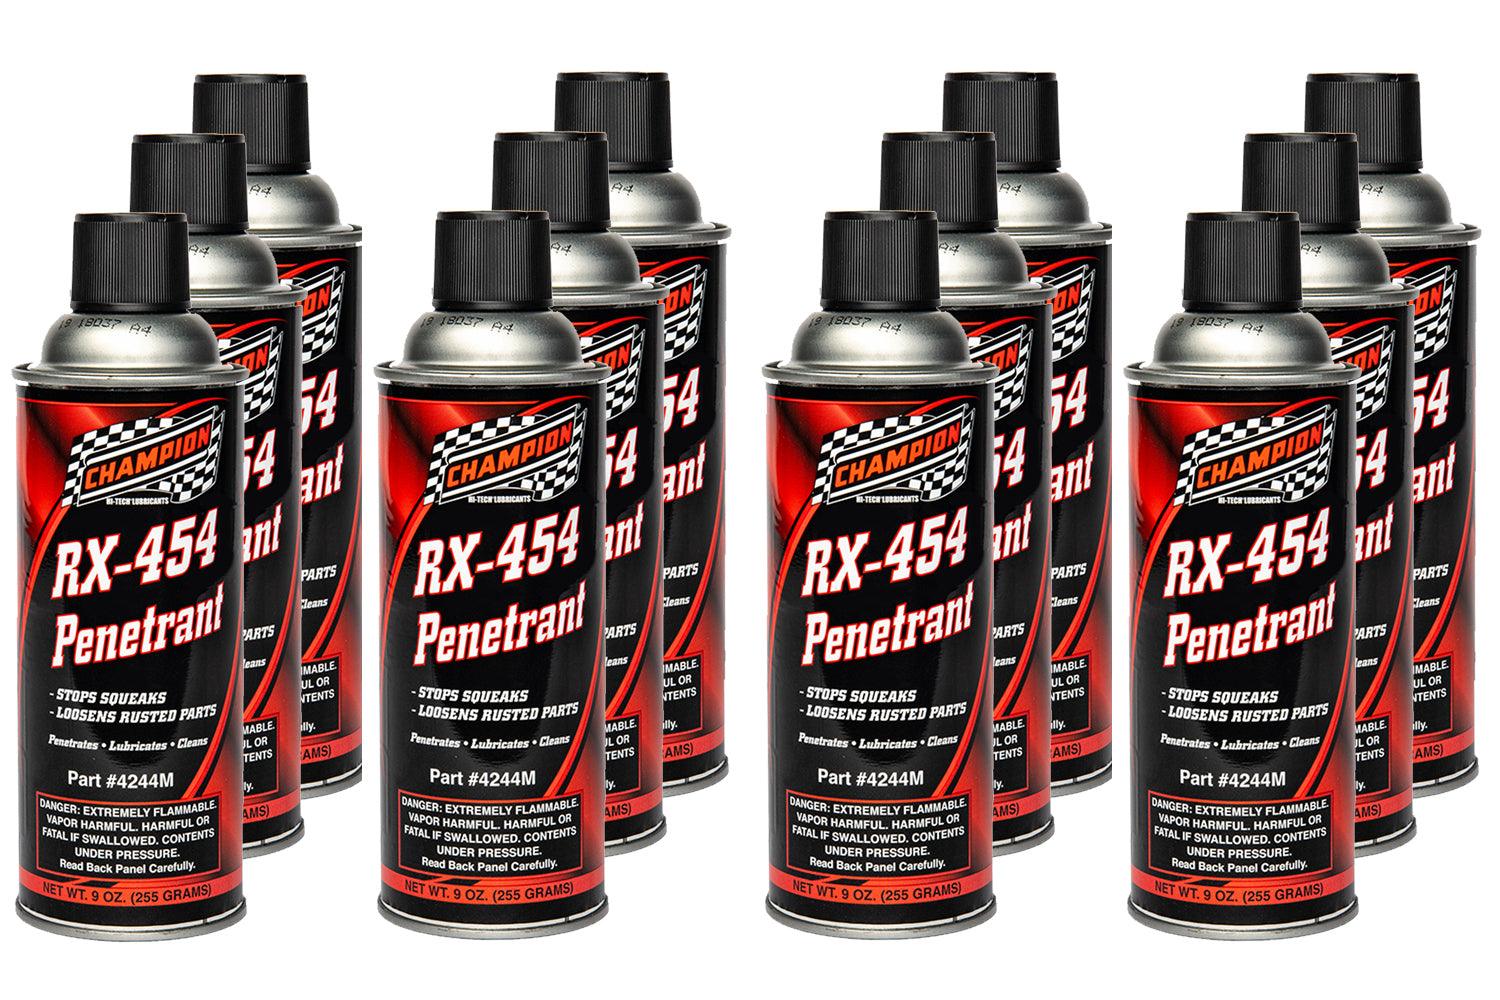 RX-454 Penetrant Case 12 x 9oz 50 State Formula - Burlile Performance Products